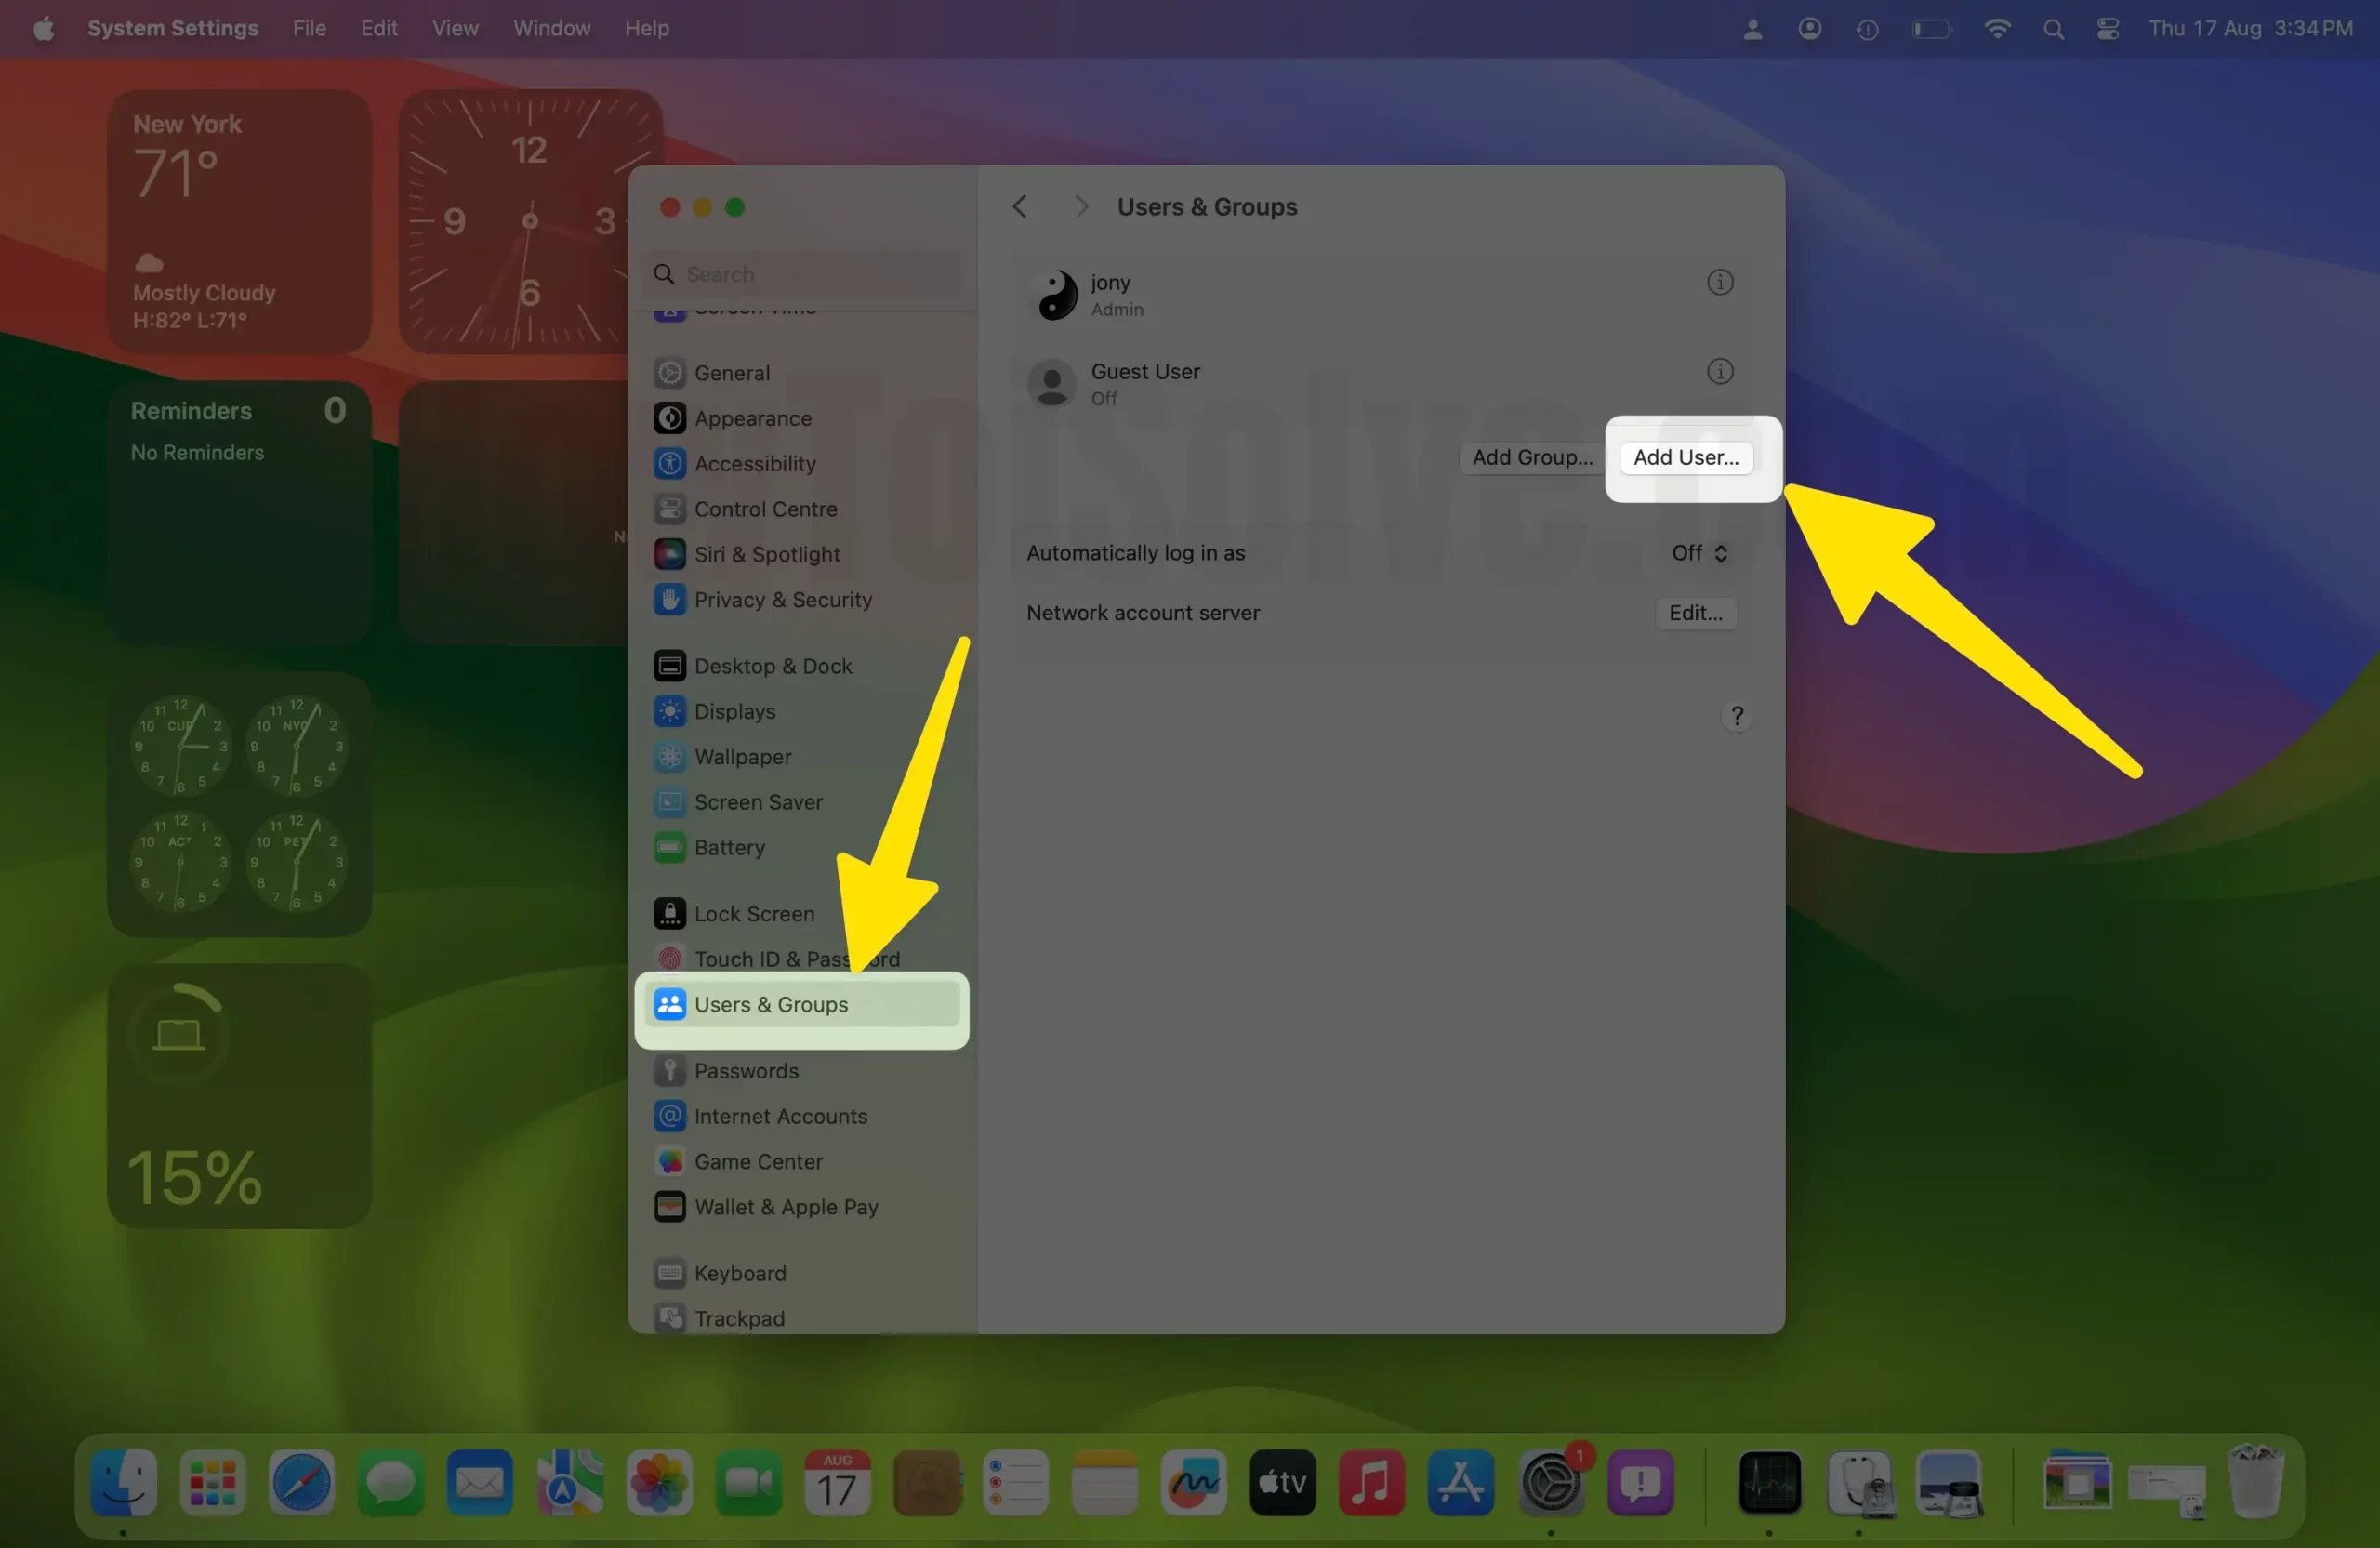 Add User Option to Add a New Admin Account on Mac